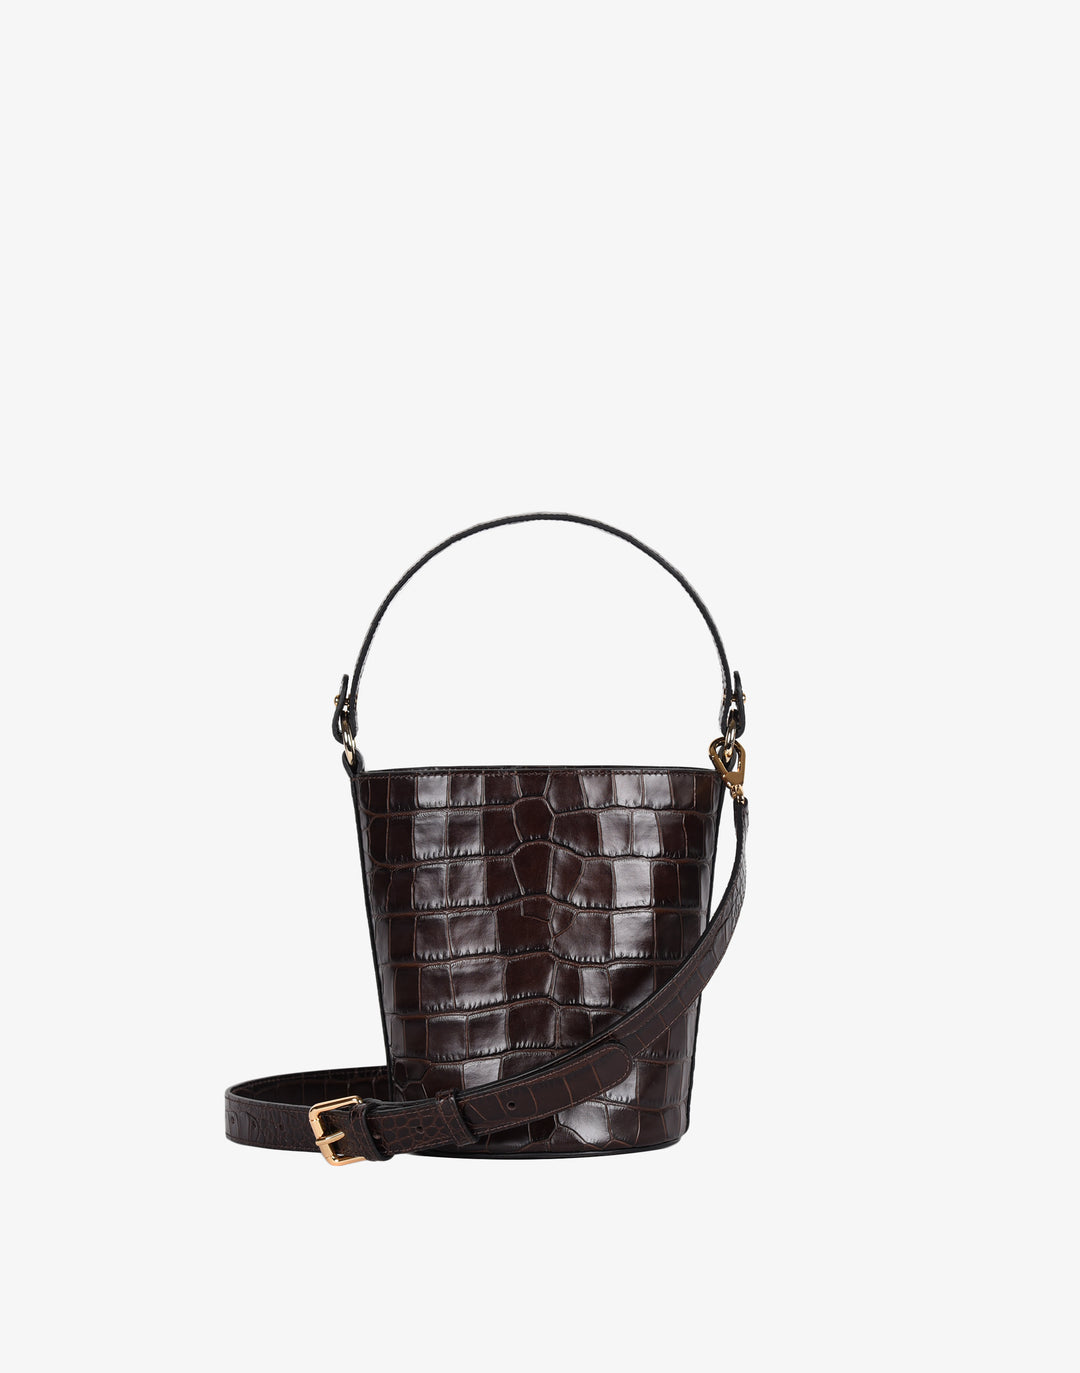 Vintage French Crocodile Patent Leather Handbag Purse